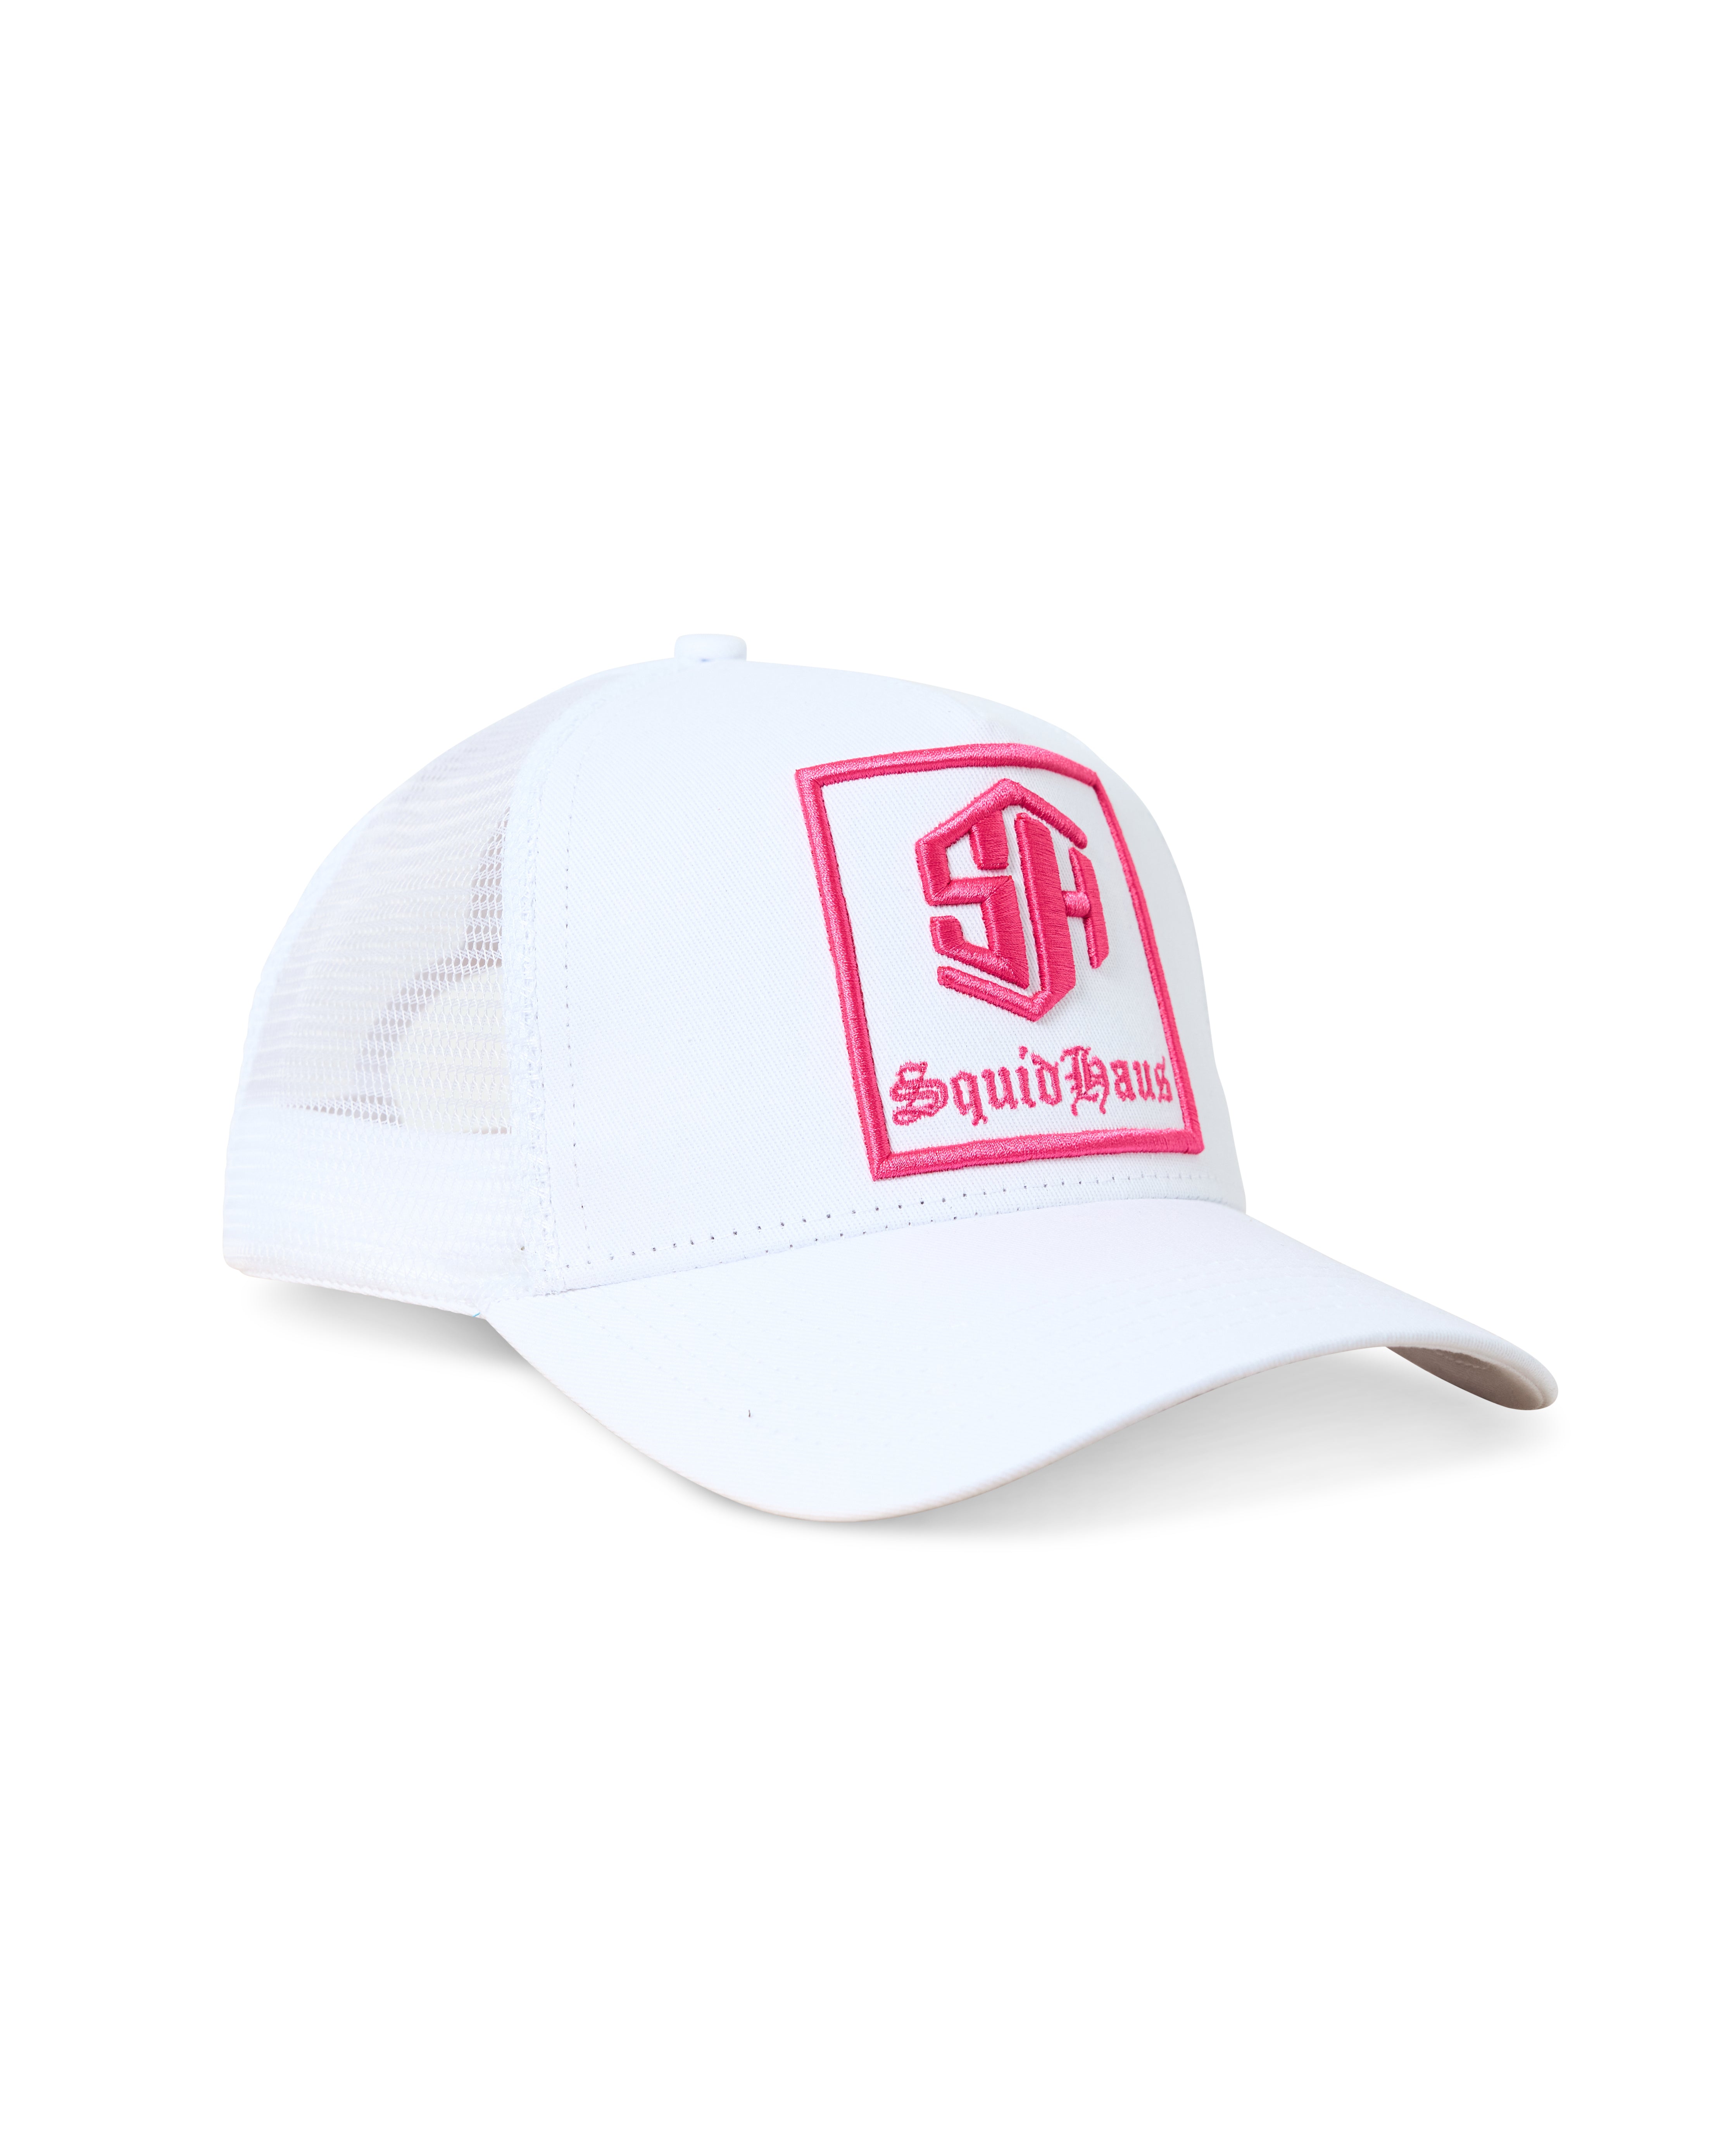 Pink and White SquidHaus Trucker Hat